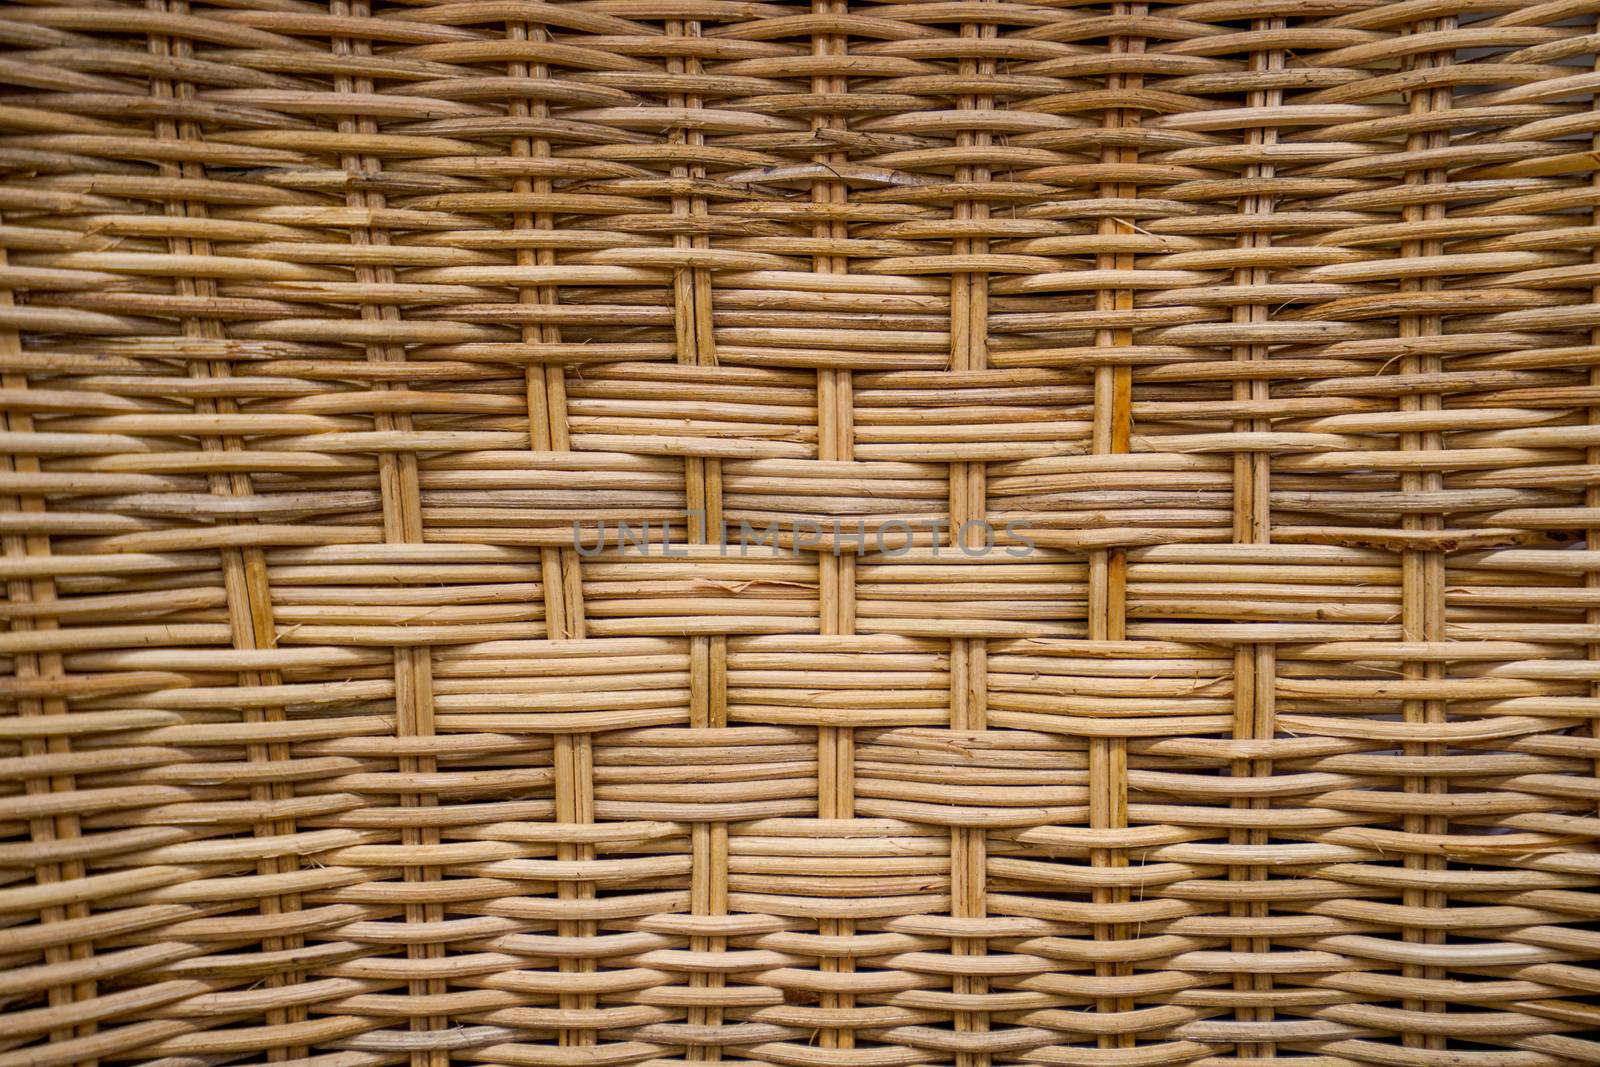 woven rattan patterns by antpkr